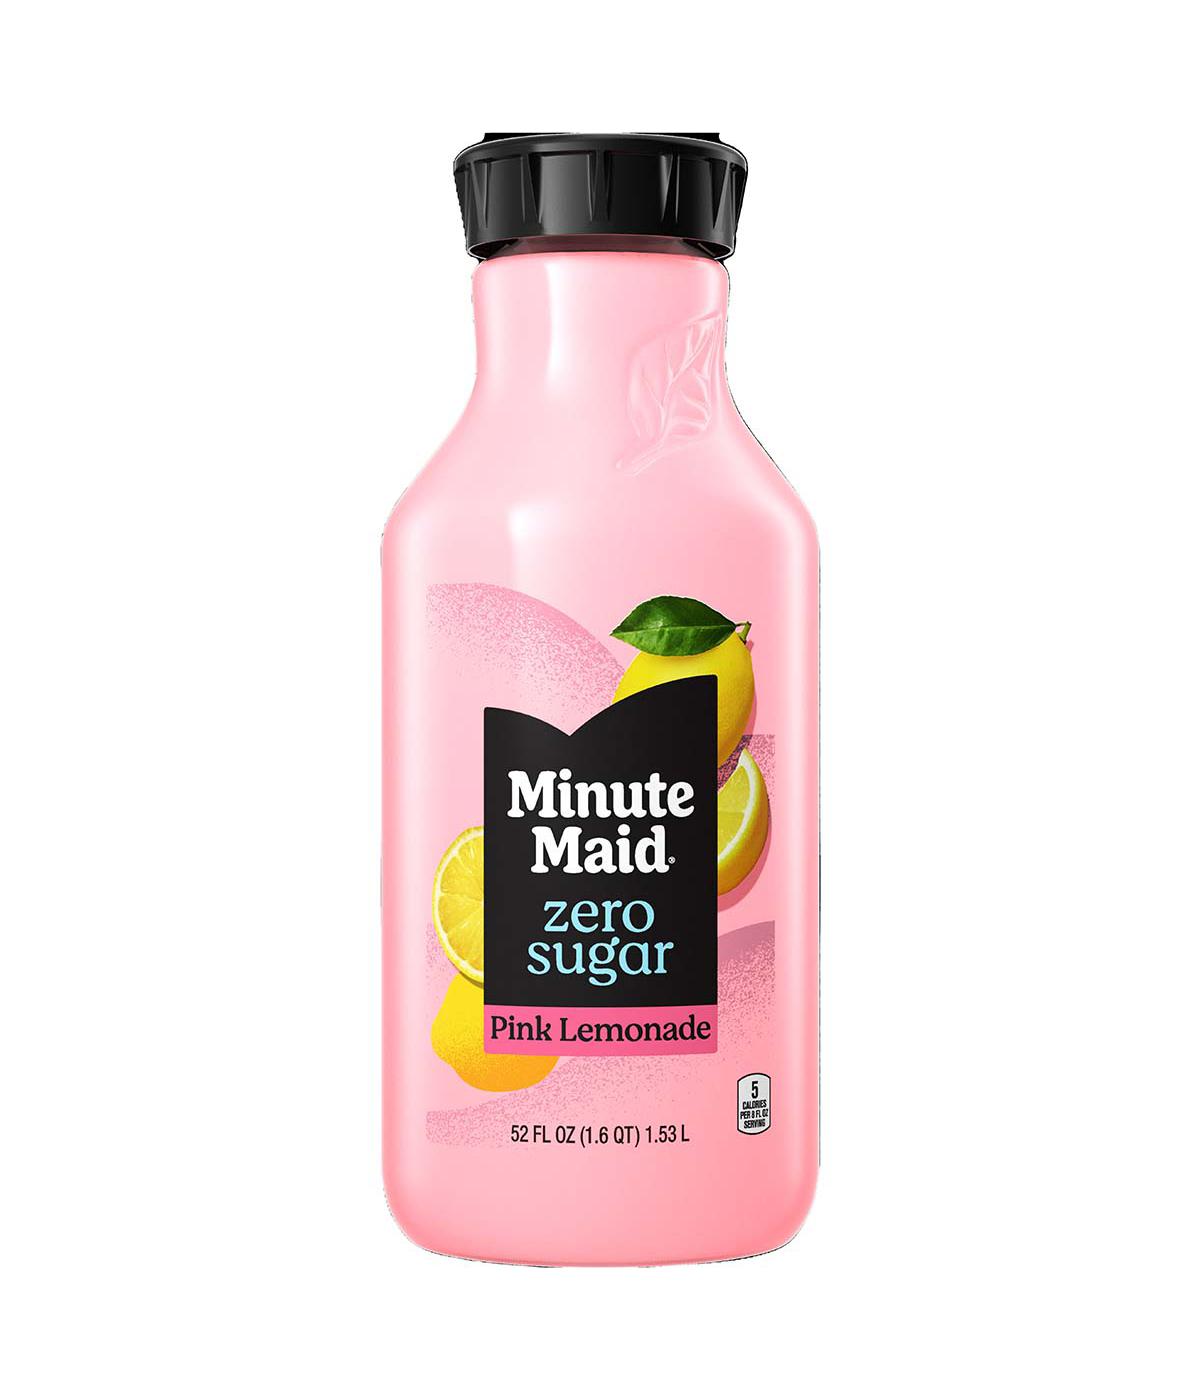 Minute Maid Zero Sugar Pink Lemonade; image 1 of 2